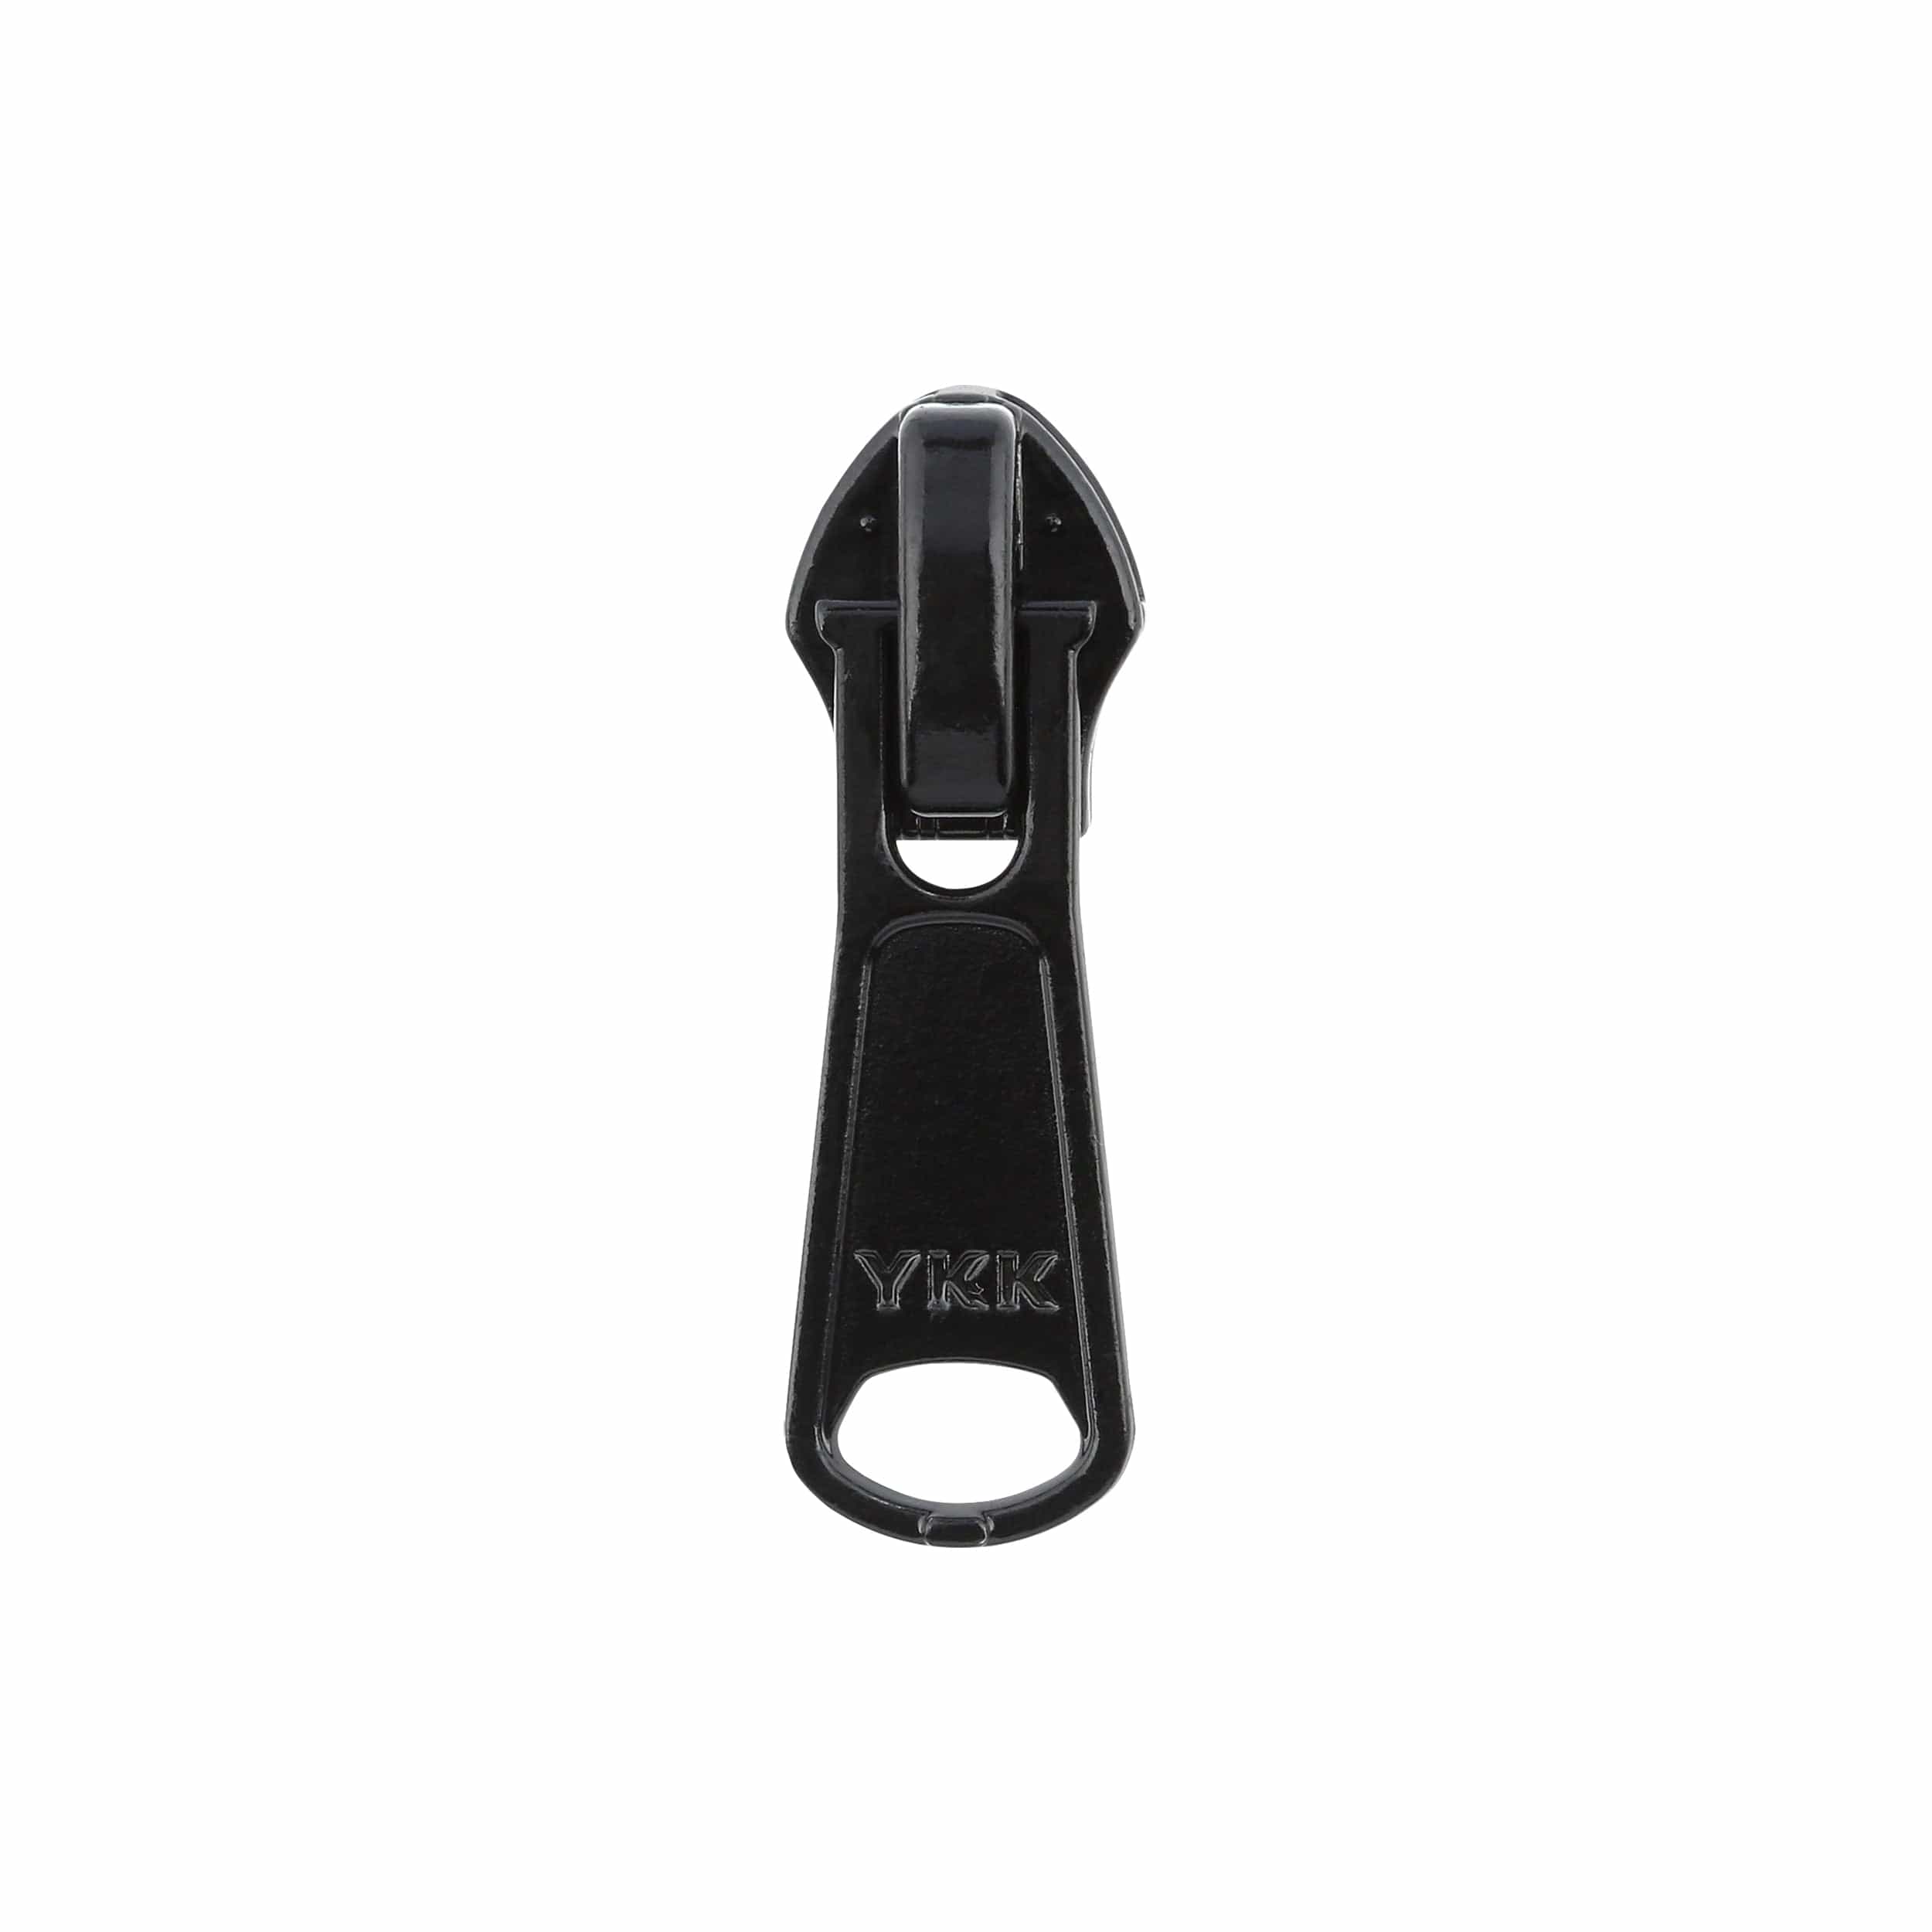 Ohio Travel Lock Zinc Black, Bag-Zippers-#8 Invisible Coil, YKK Auto Slider, Zipper Alloy